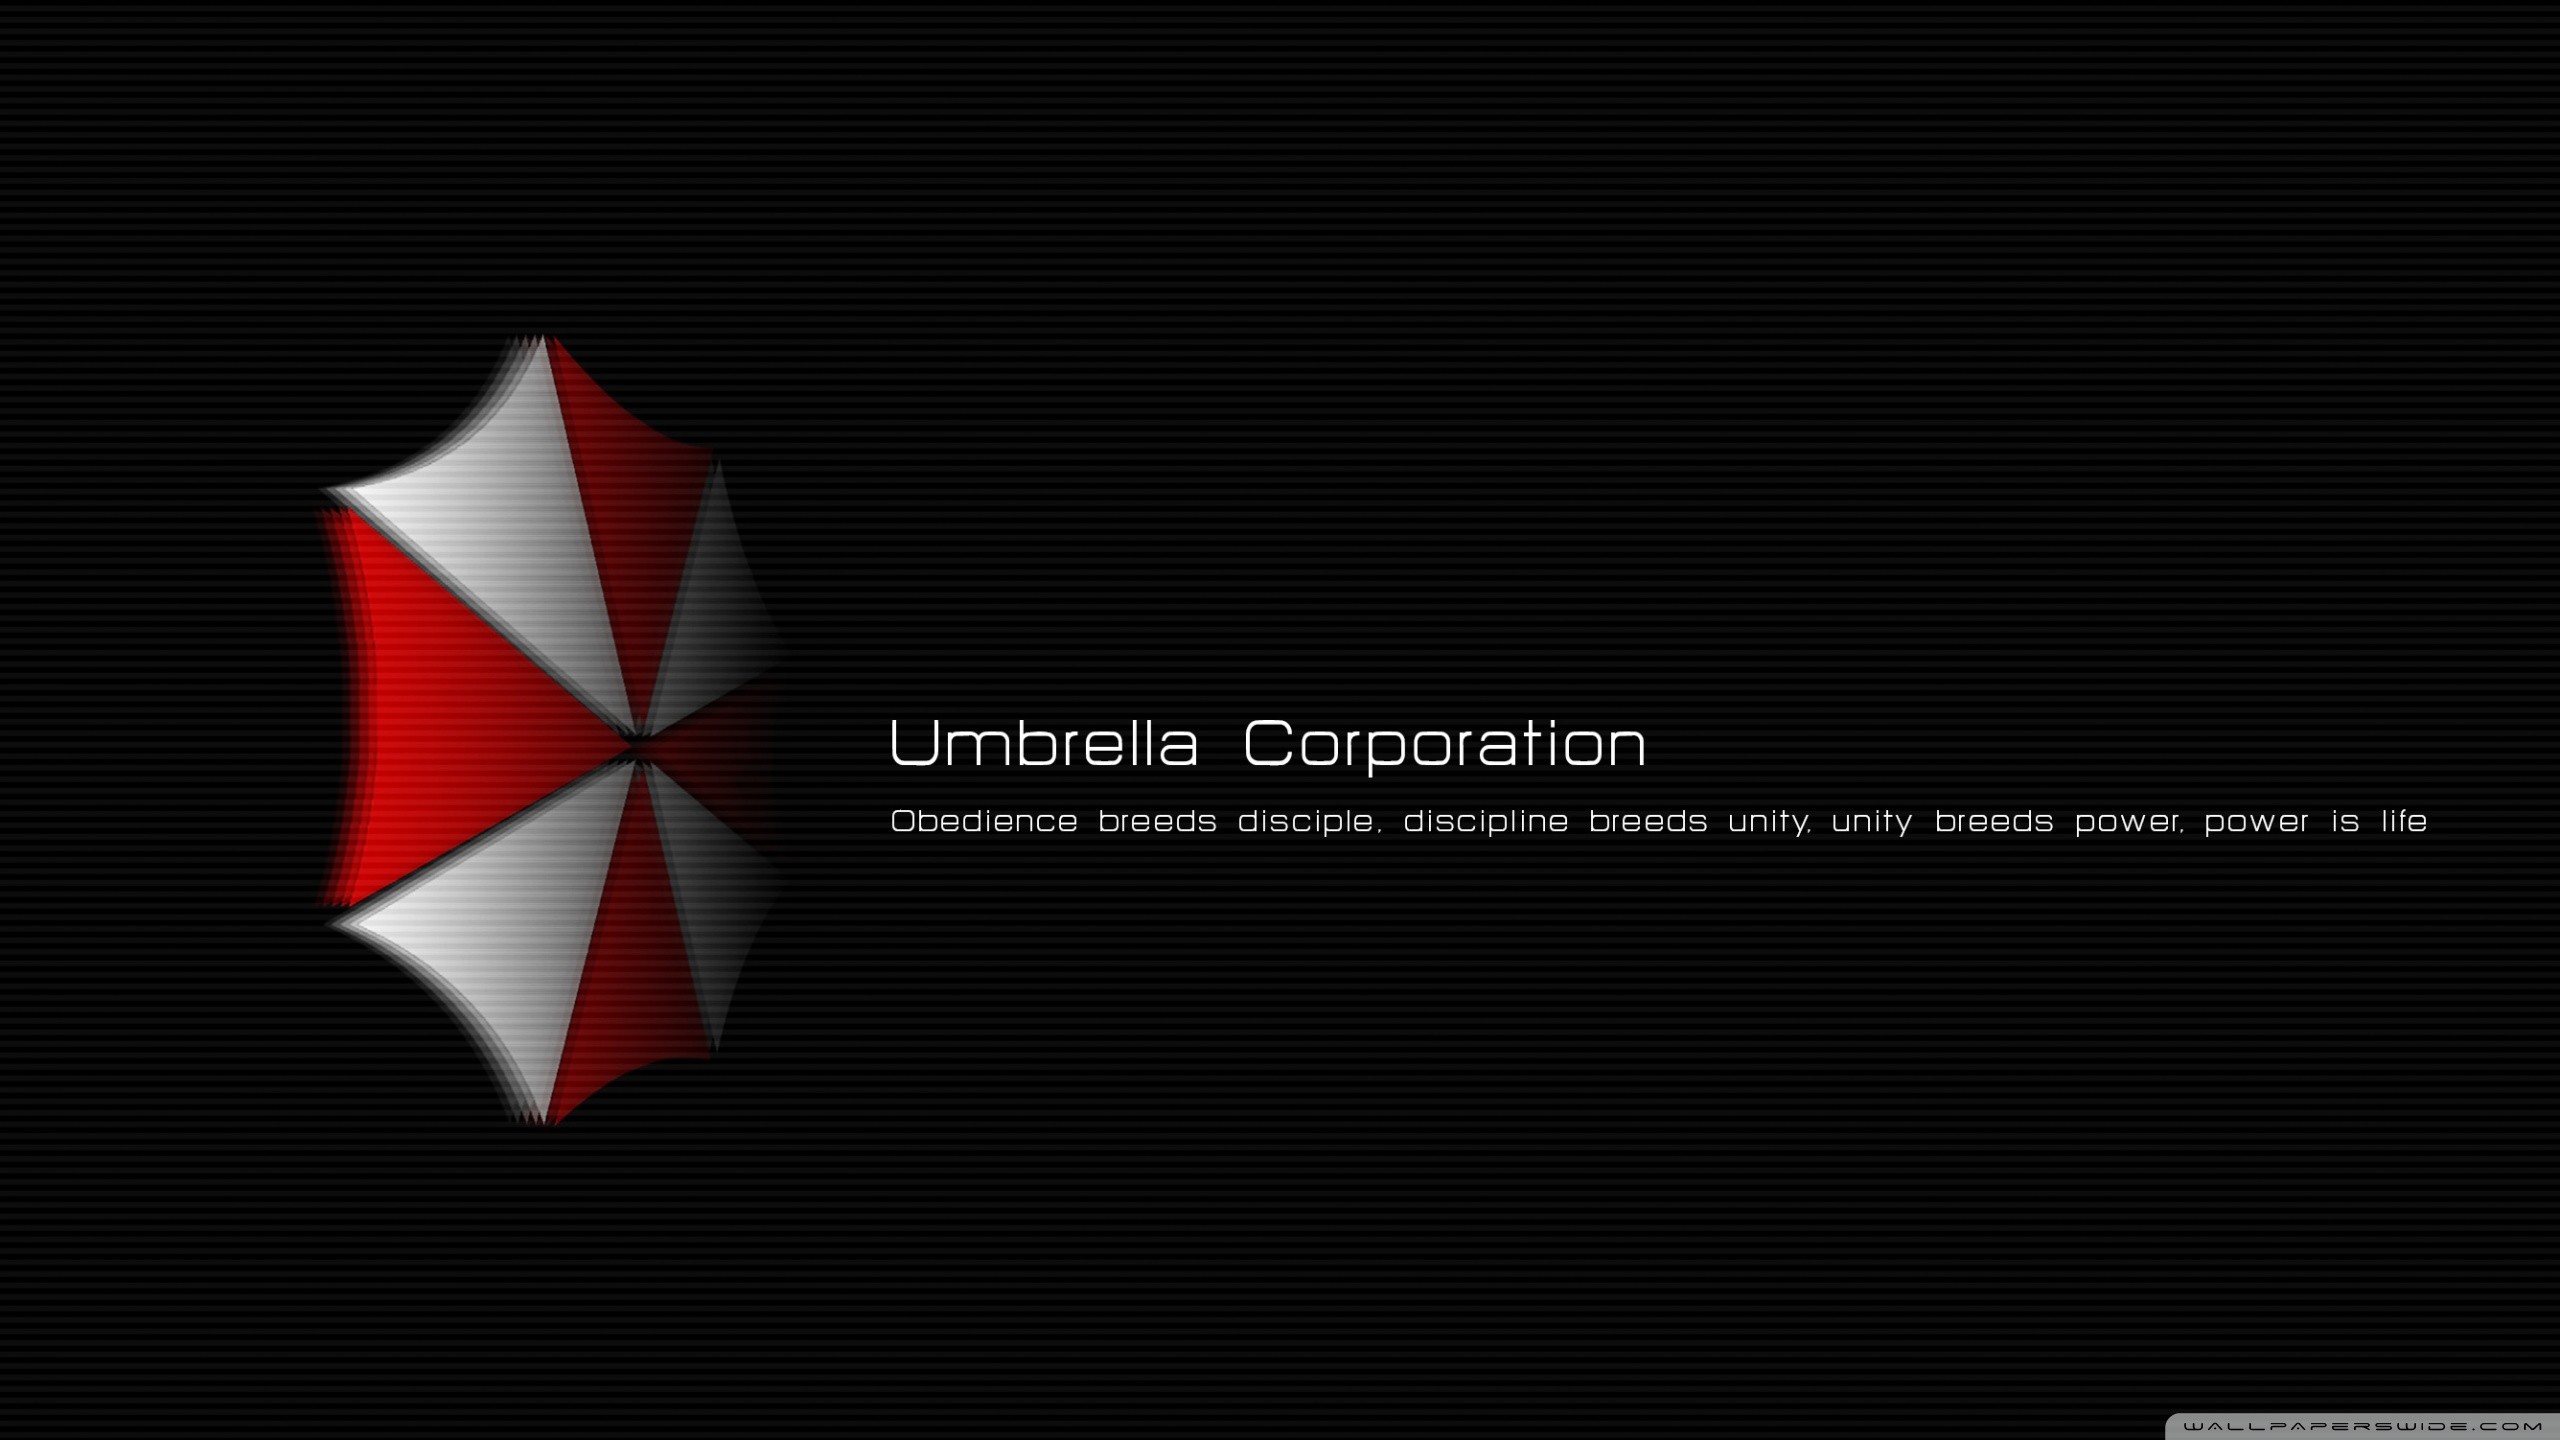 Video games Resident Evil Jill Valentine Umbrella Corp_ wallpaper, 1920x1200, 203319